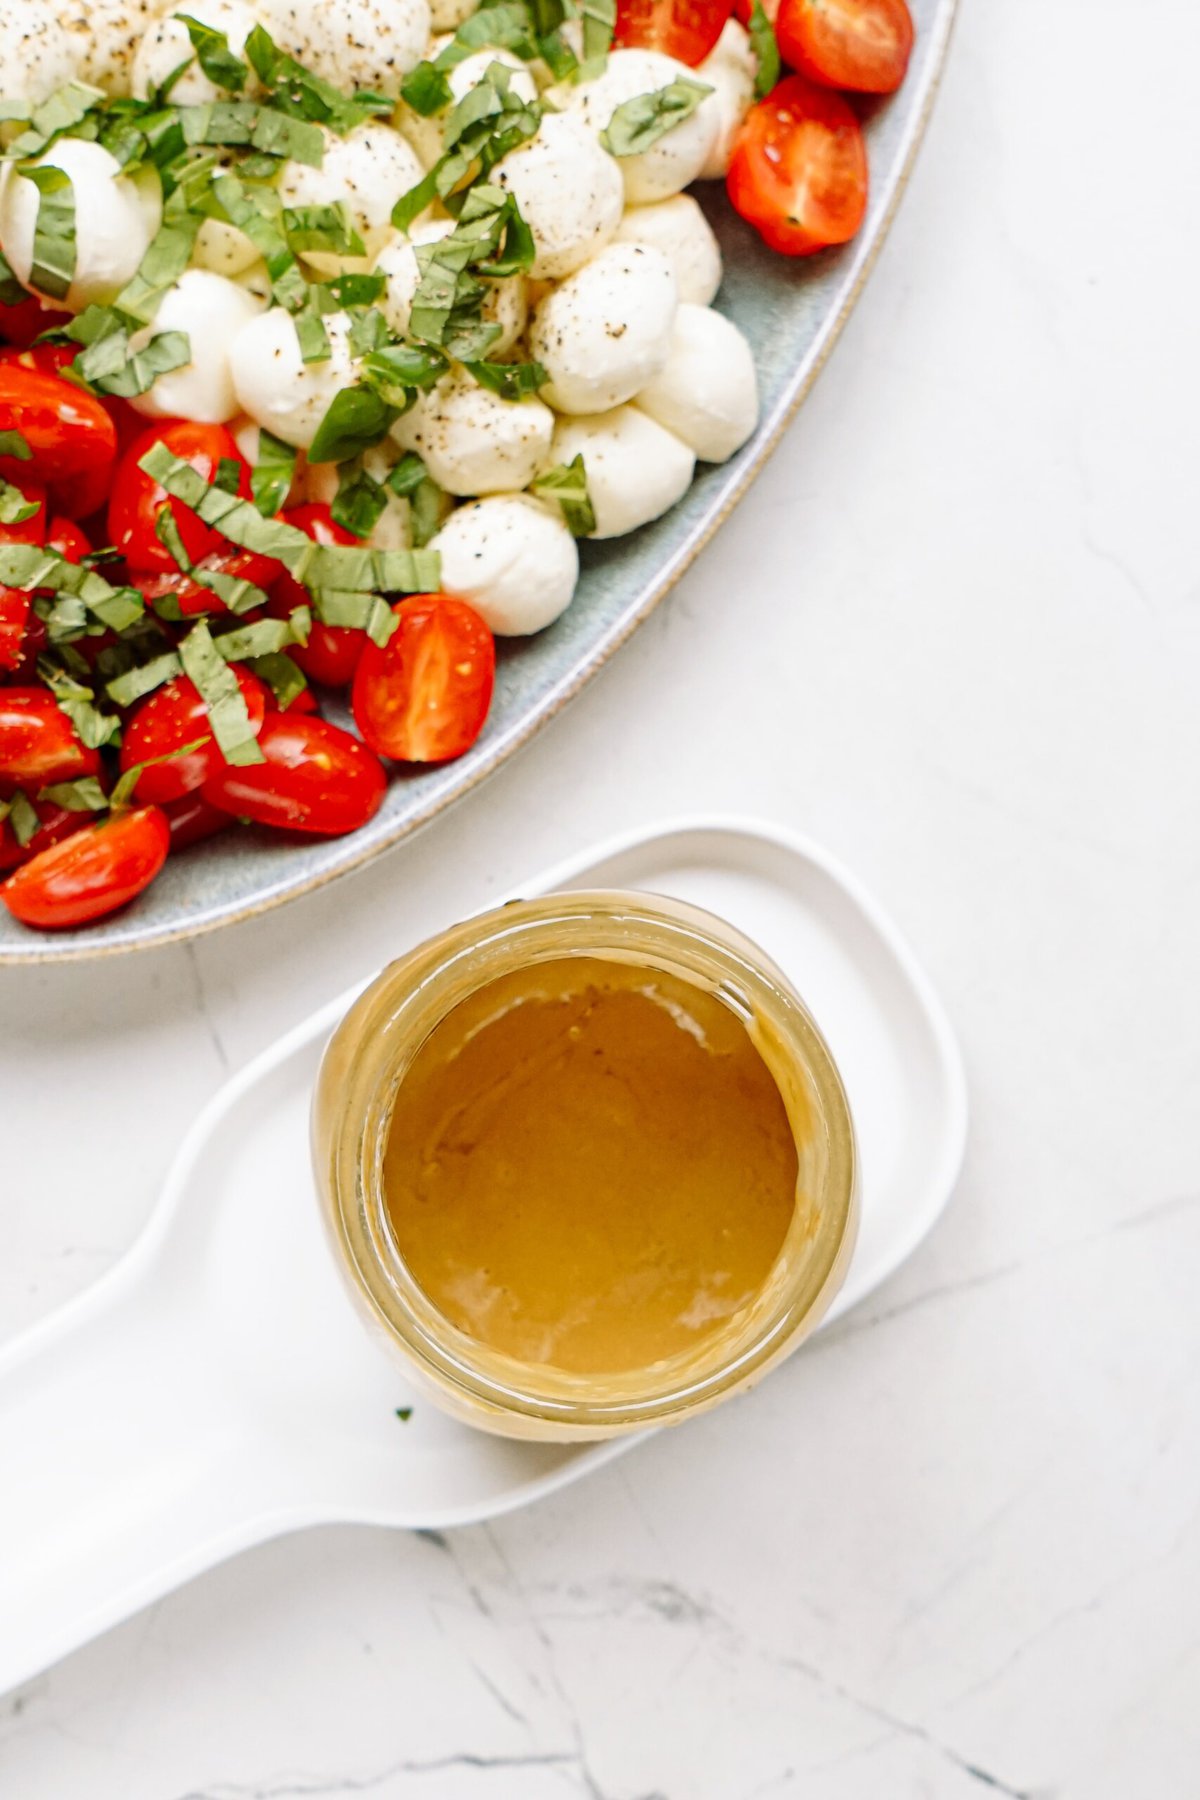 garlic mustard balsamic dressing next to a plate of tomatoes and mozzarella balls